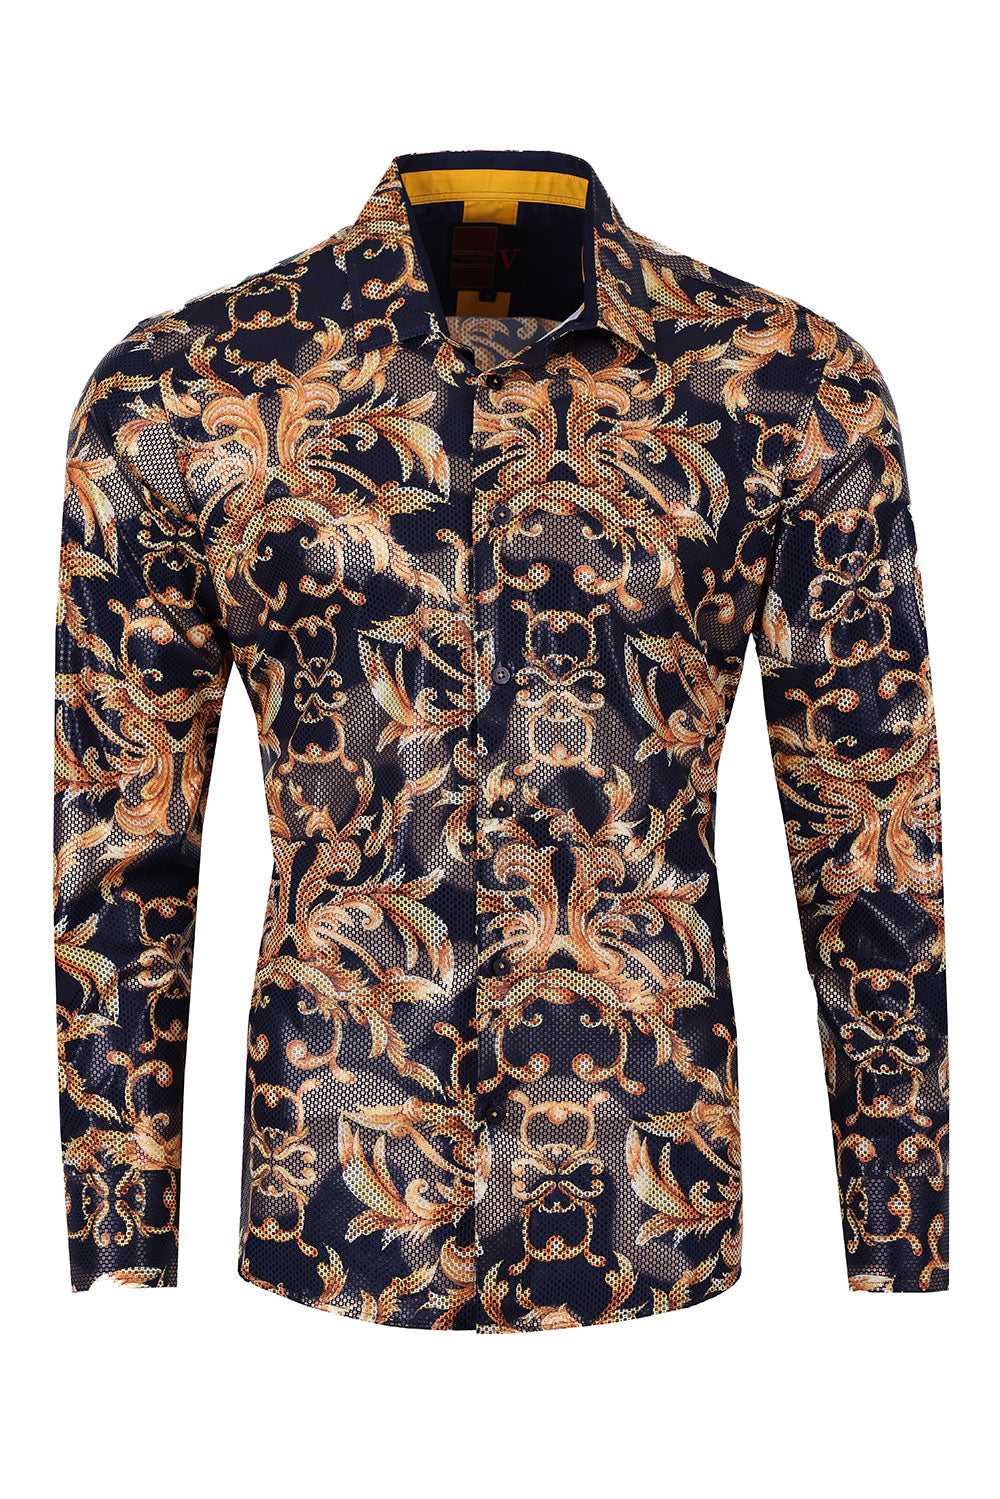 Vassari Mens Floral Print Design Button Down Luxury Shirt  2VS157 Navy